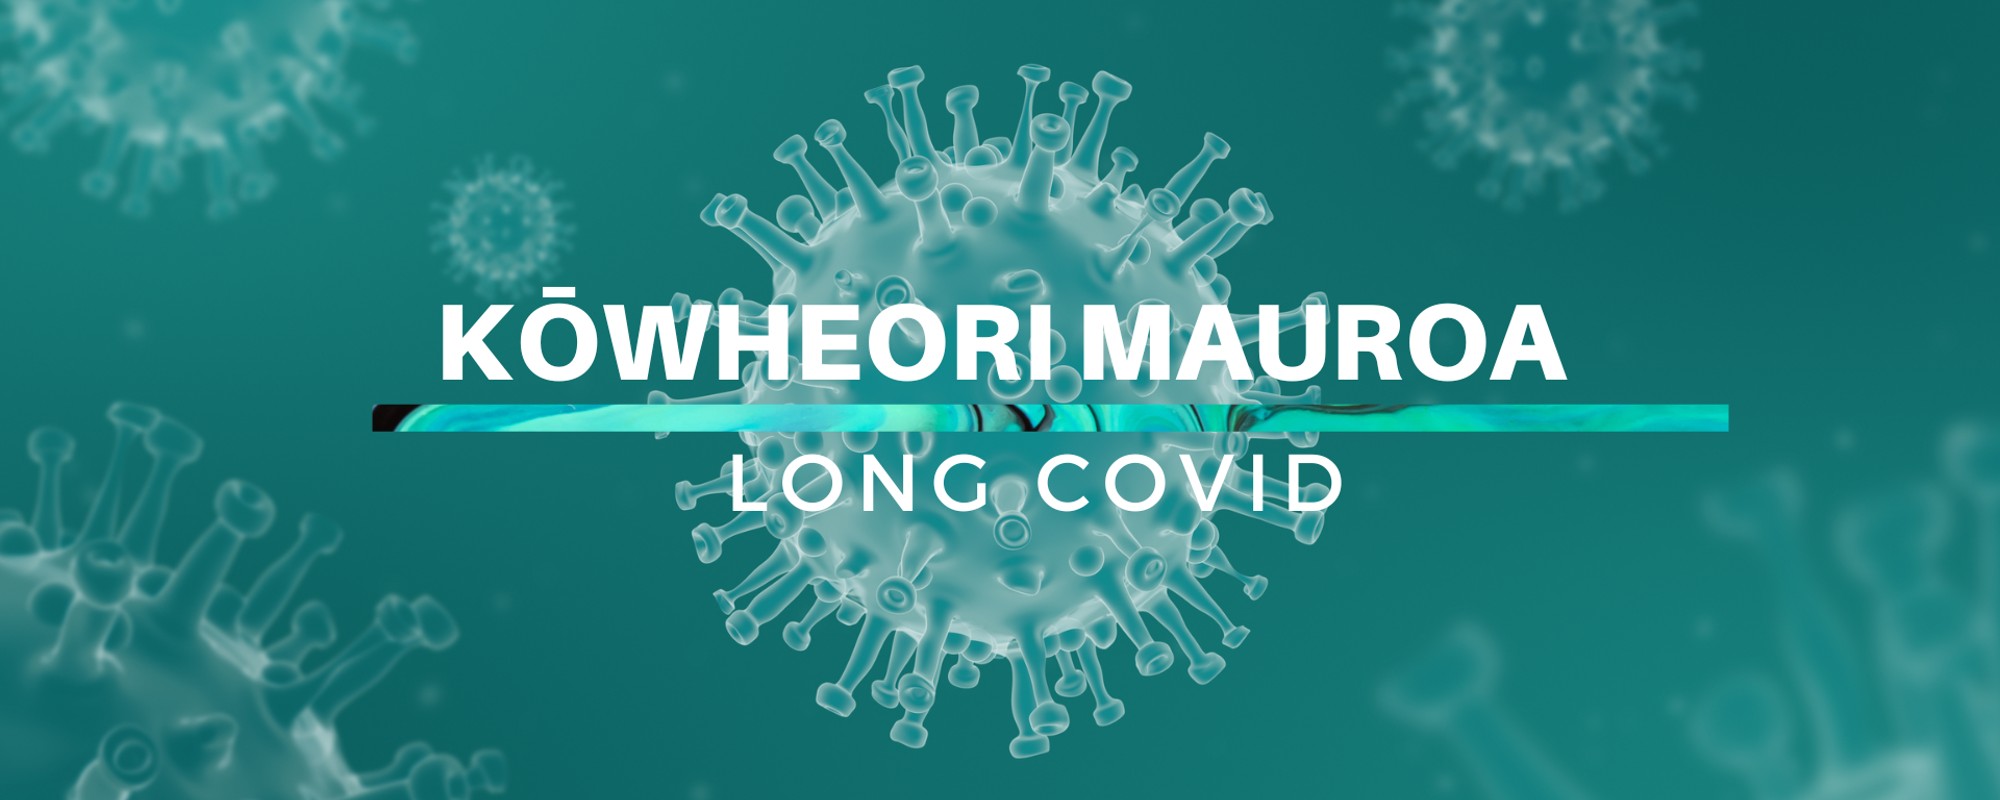 Turquoise background with white animated virus and white writing stating 